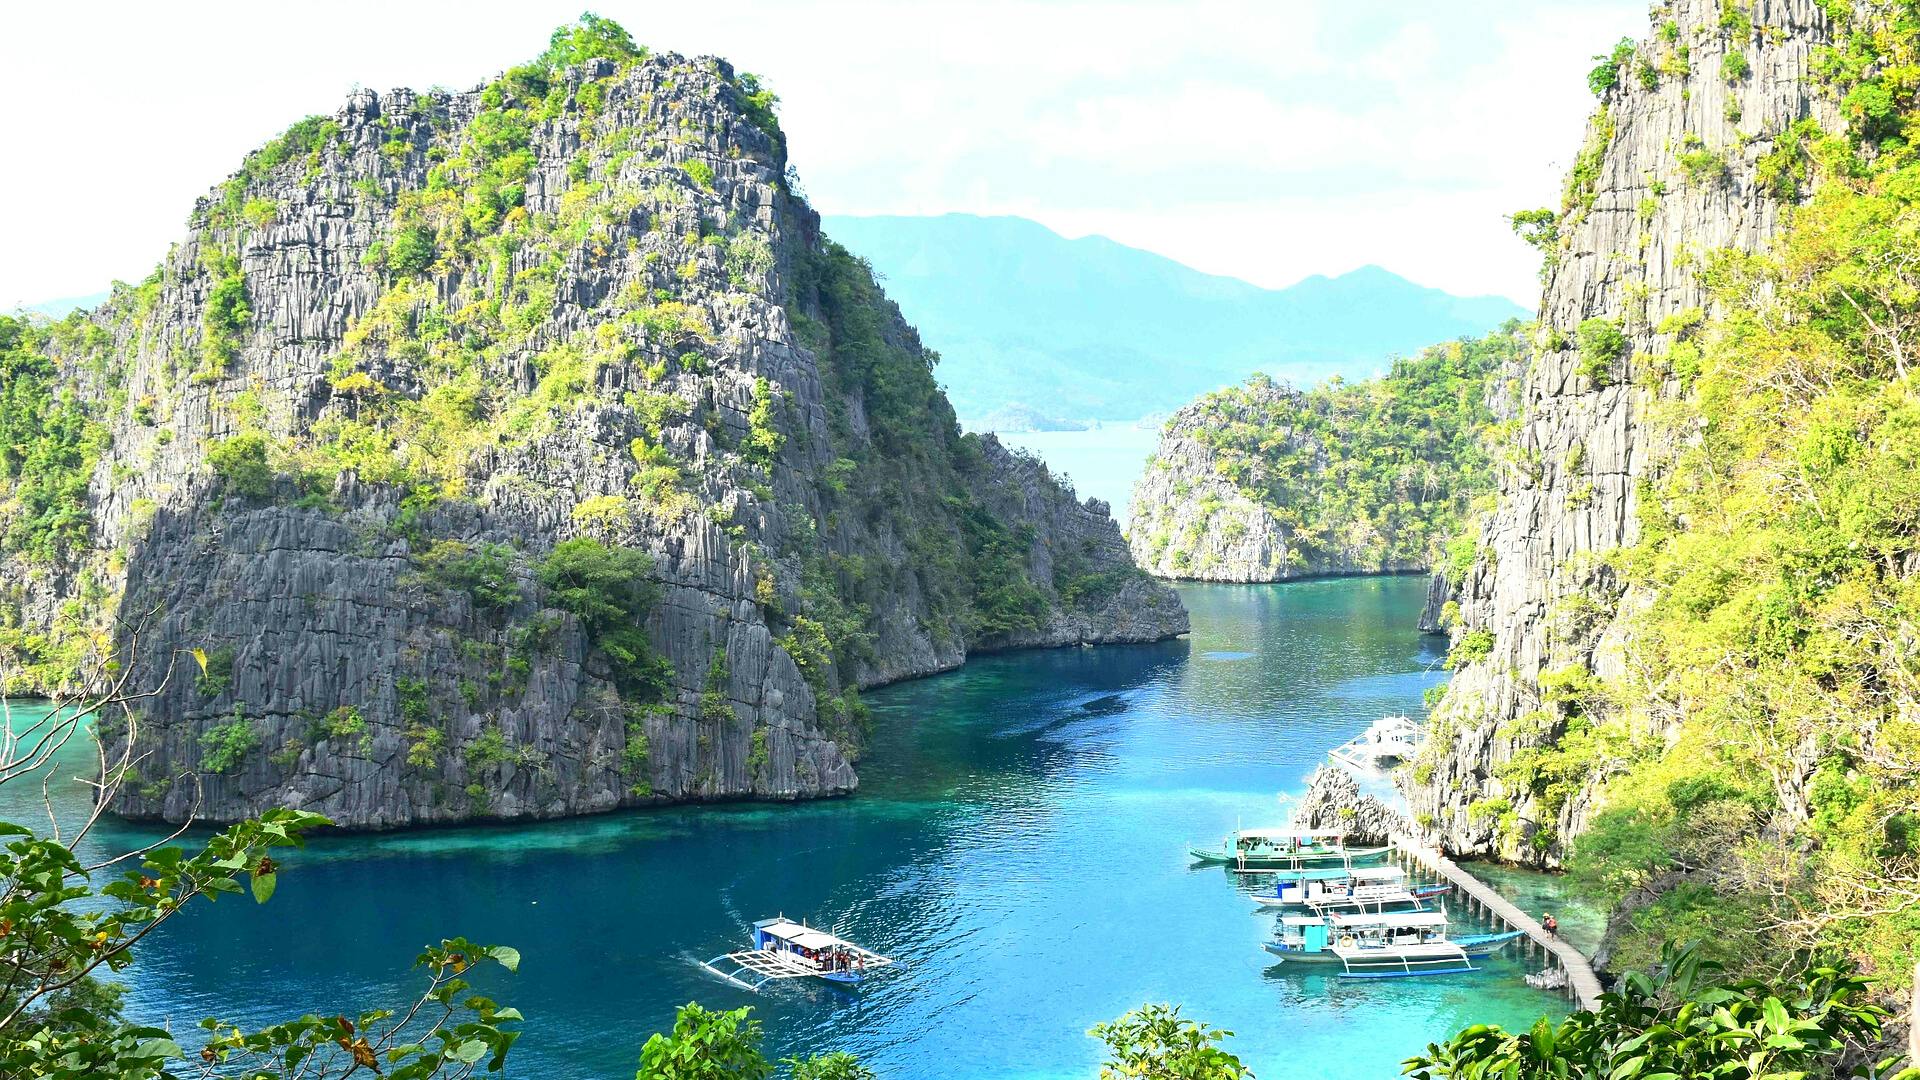 4-Day Palawan Philippines Virtual Tour | El Nido, Coron, Puerto Princesa, Diving Spots - day 2